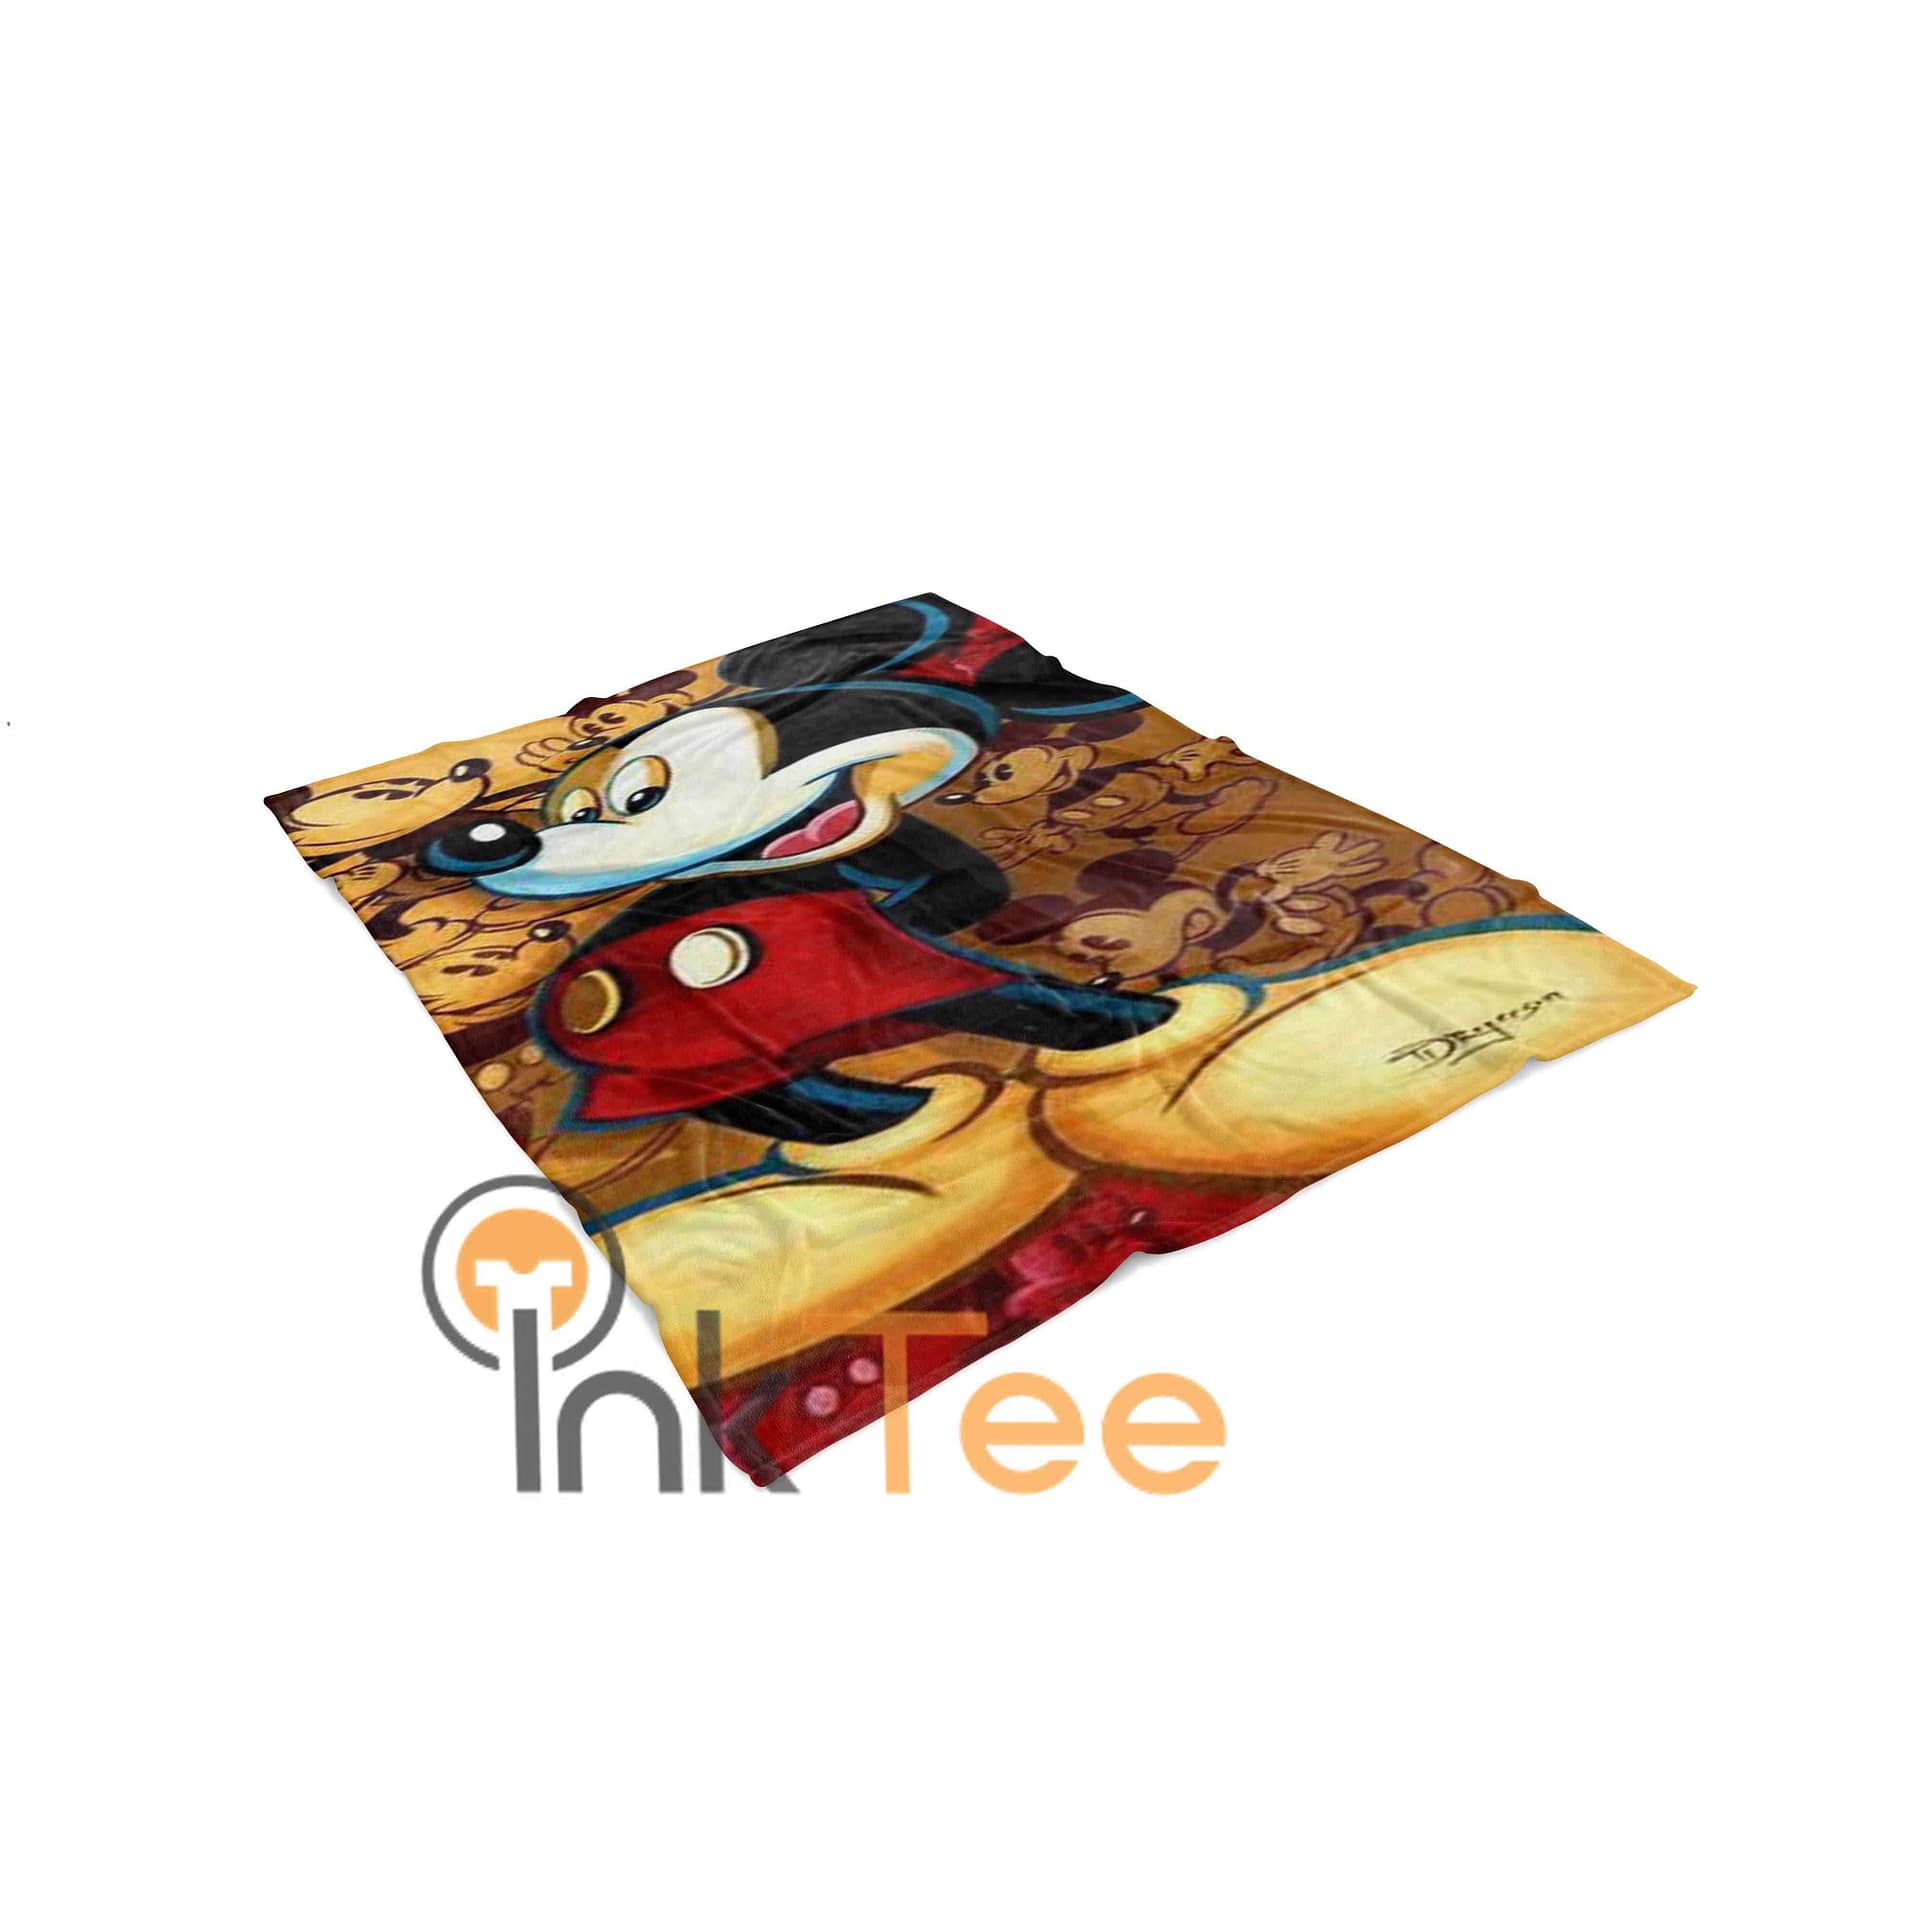 Inktee Store - Disney Mickey Mouse Limited Edition Amazon Best Seller Sku 4090 Fleece Blanket Image